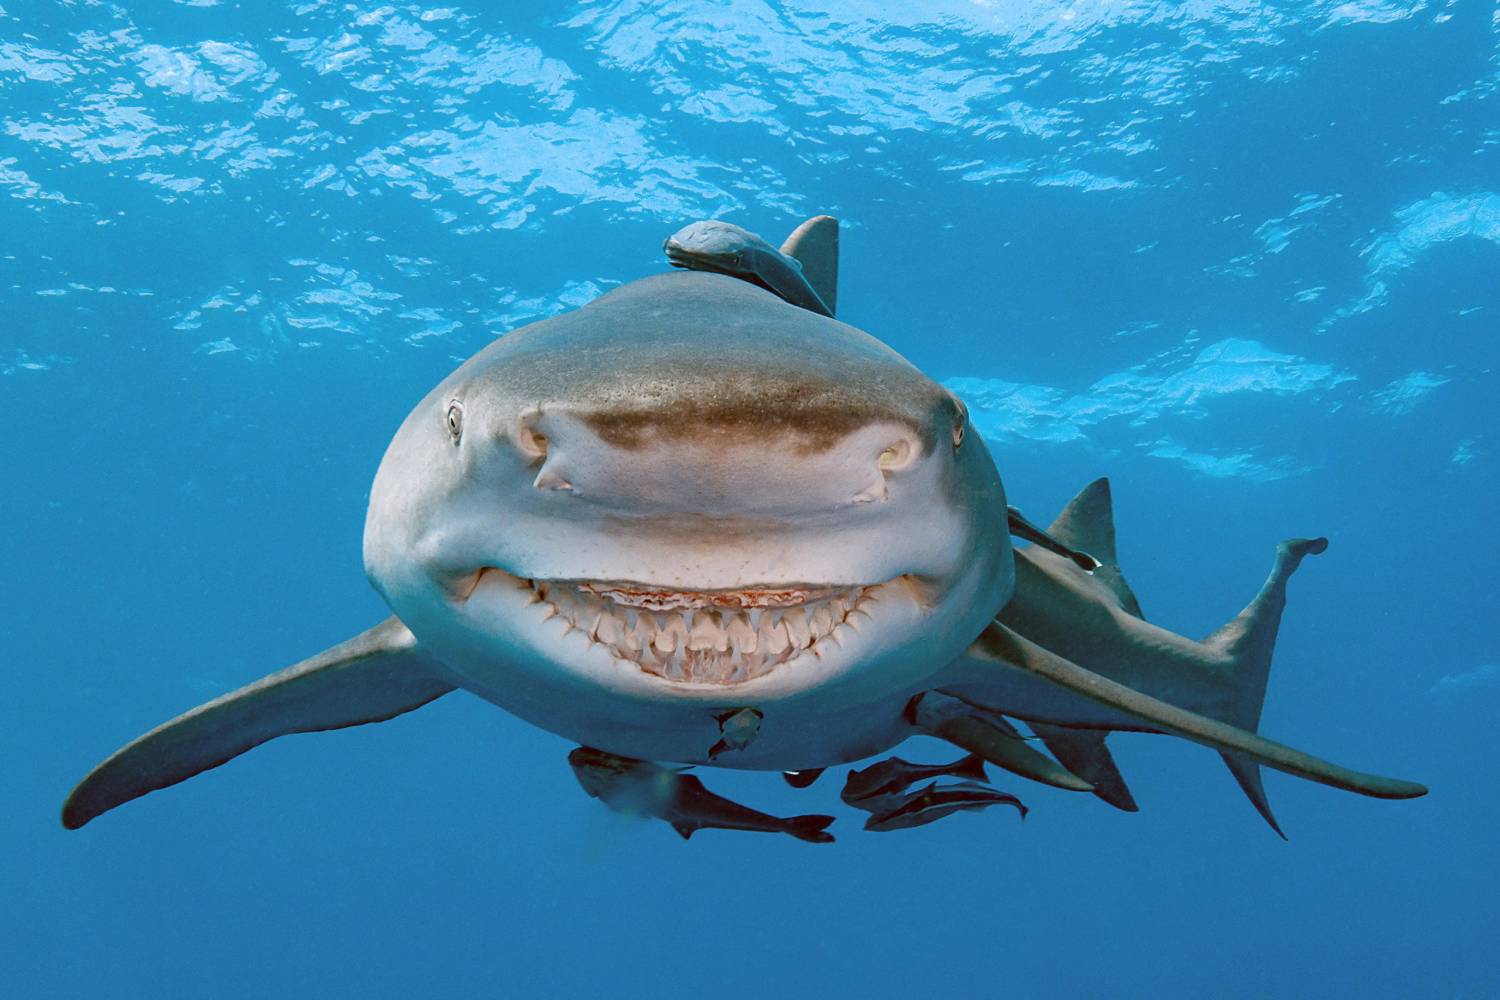 Snooty le requin citron souriant